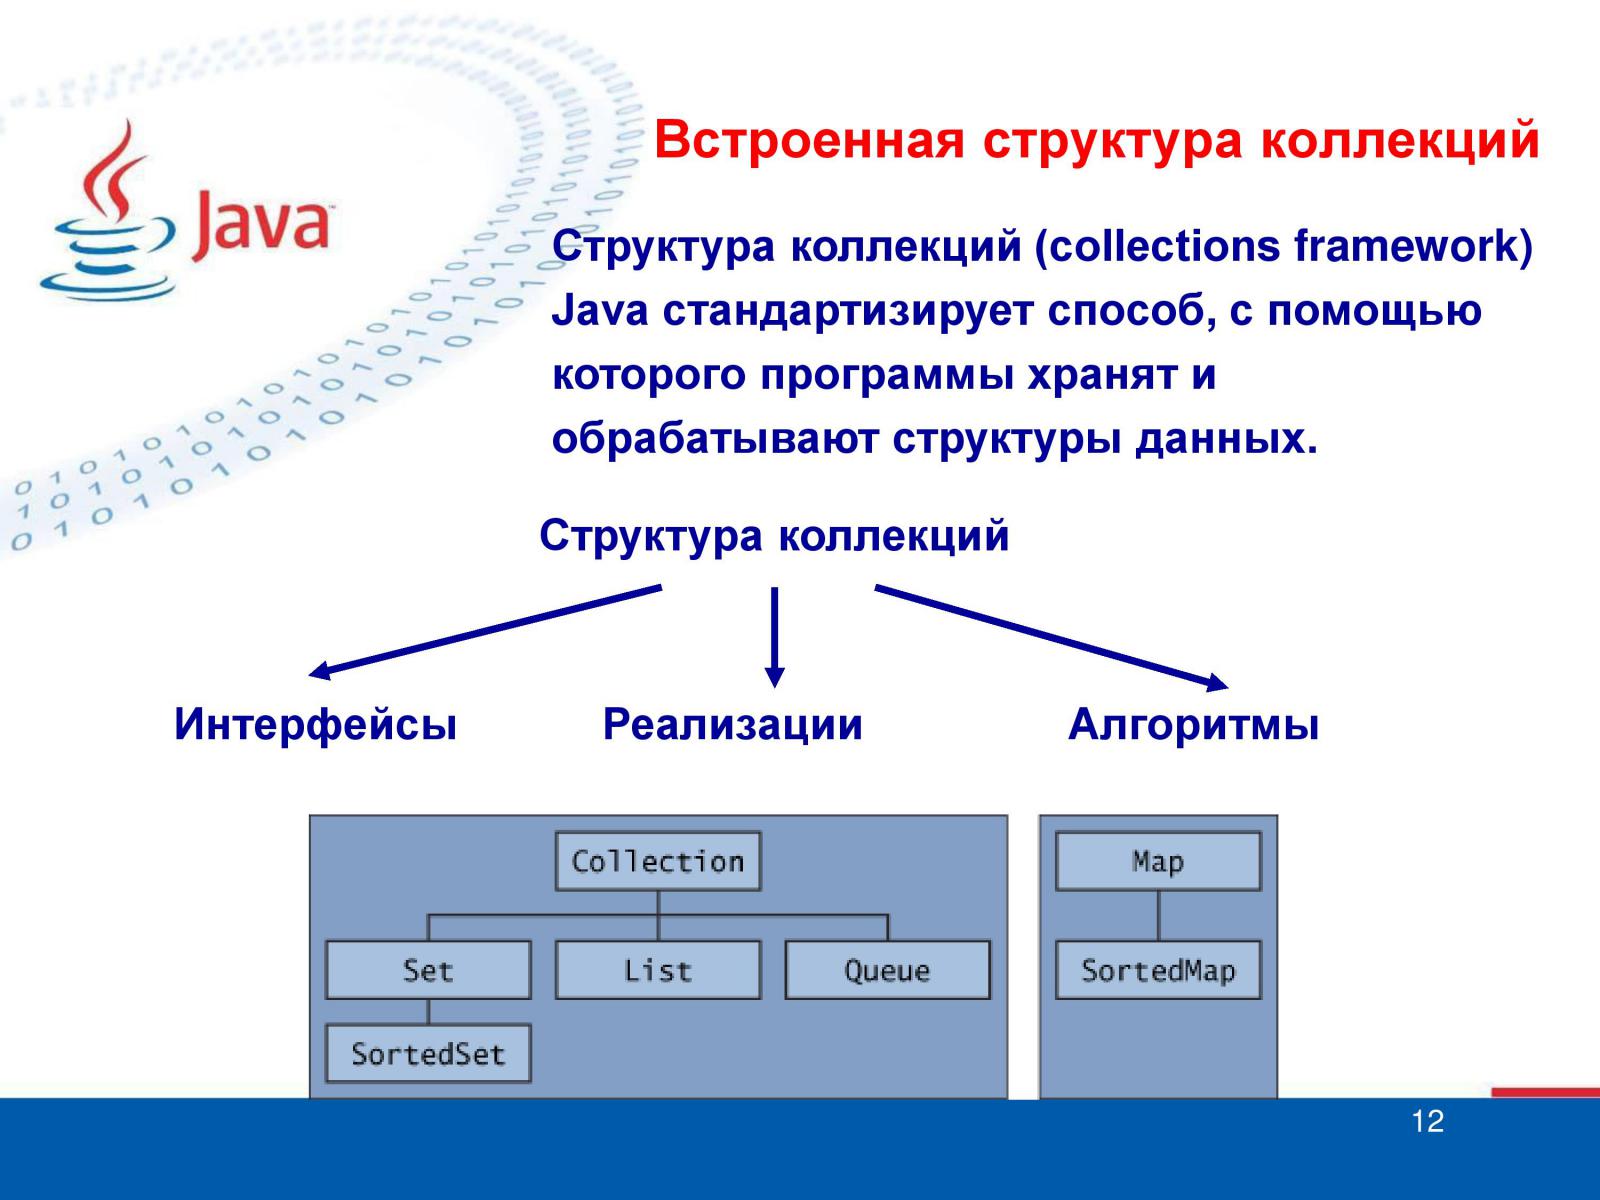 Collections framework. Структура коллекций java. Структуры данных java. Структура программы на языке java. Встроенные структура данных.